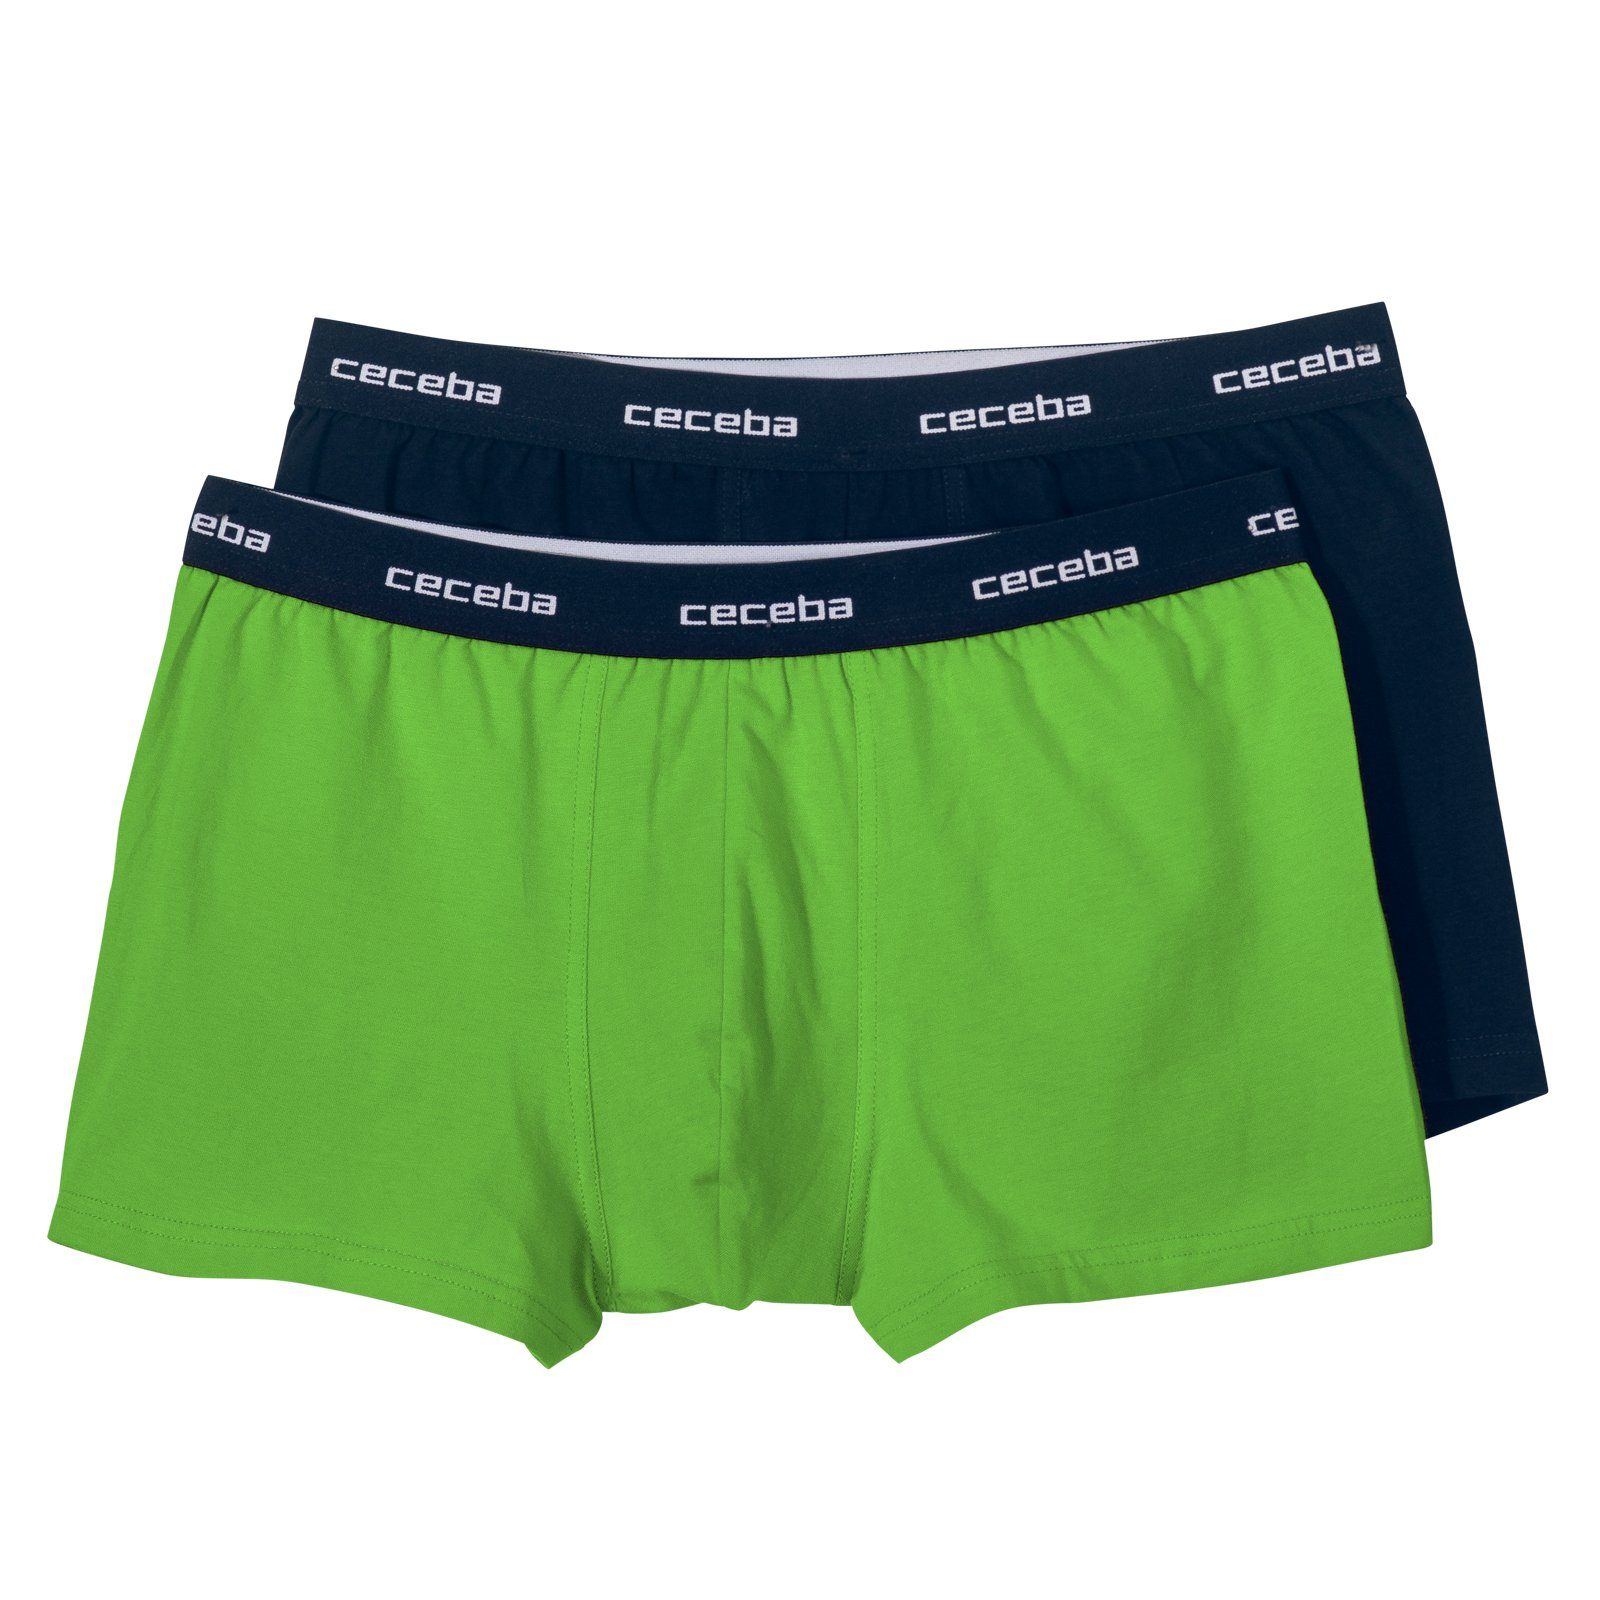 CECEBA Retro Pants »Große Größen Herren Pants hellgrün/navy 2er-Pack  Ceceba« (2 Stück) online kaufen | OTTO